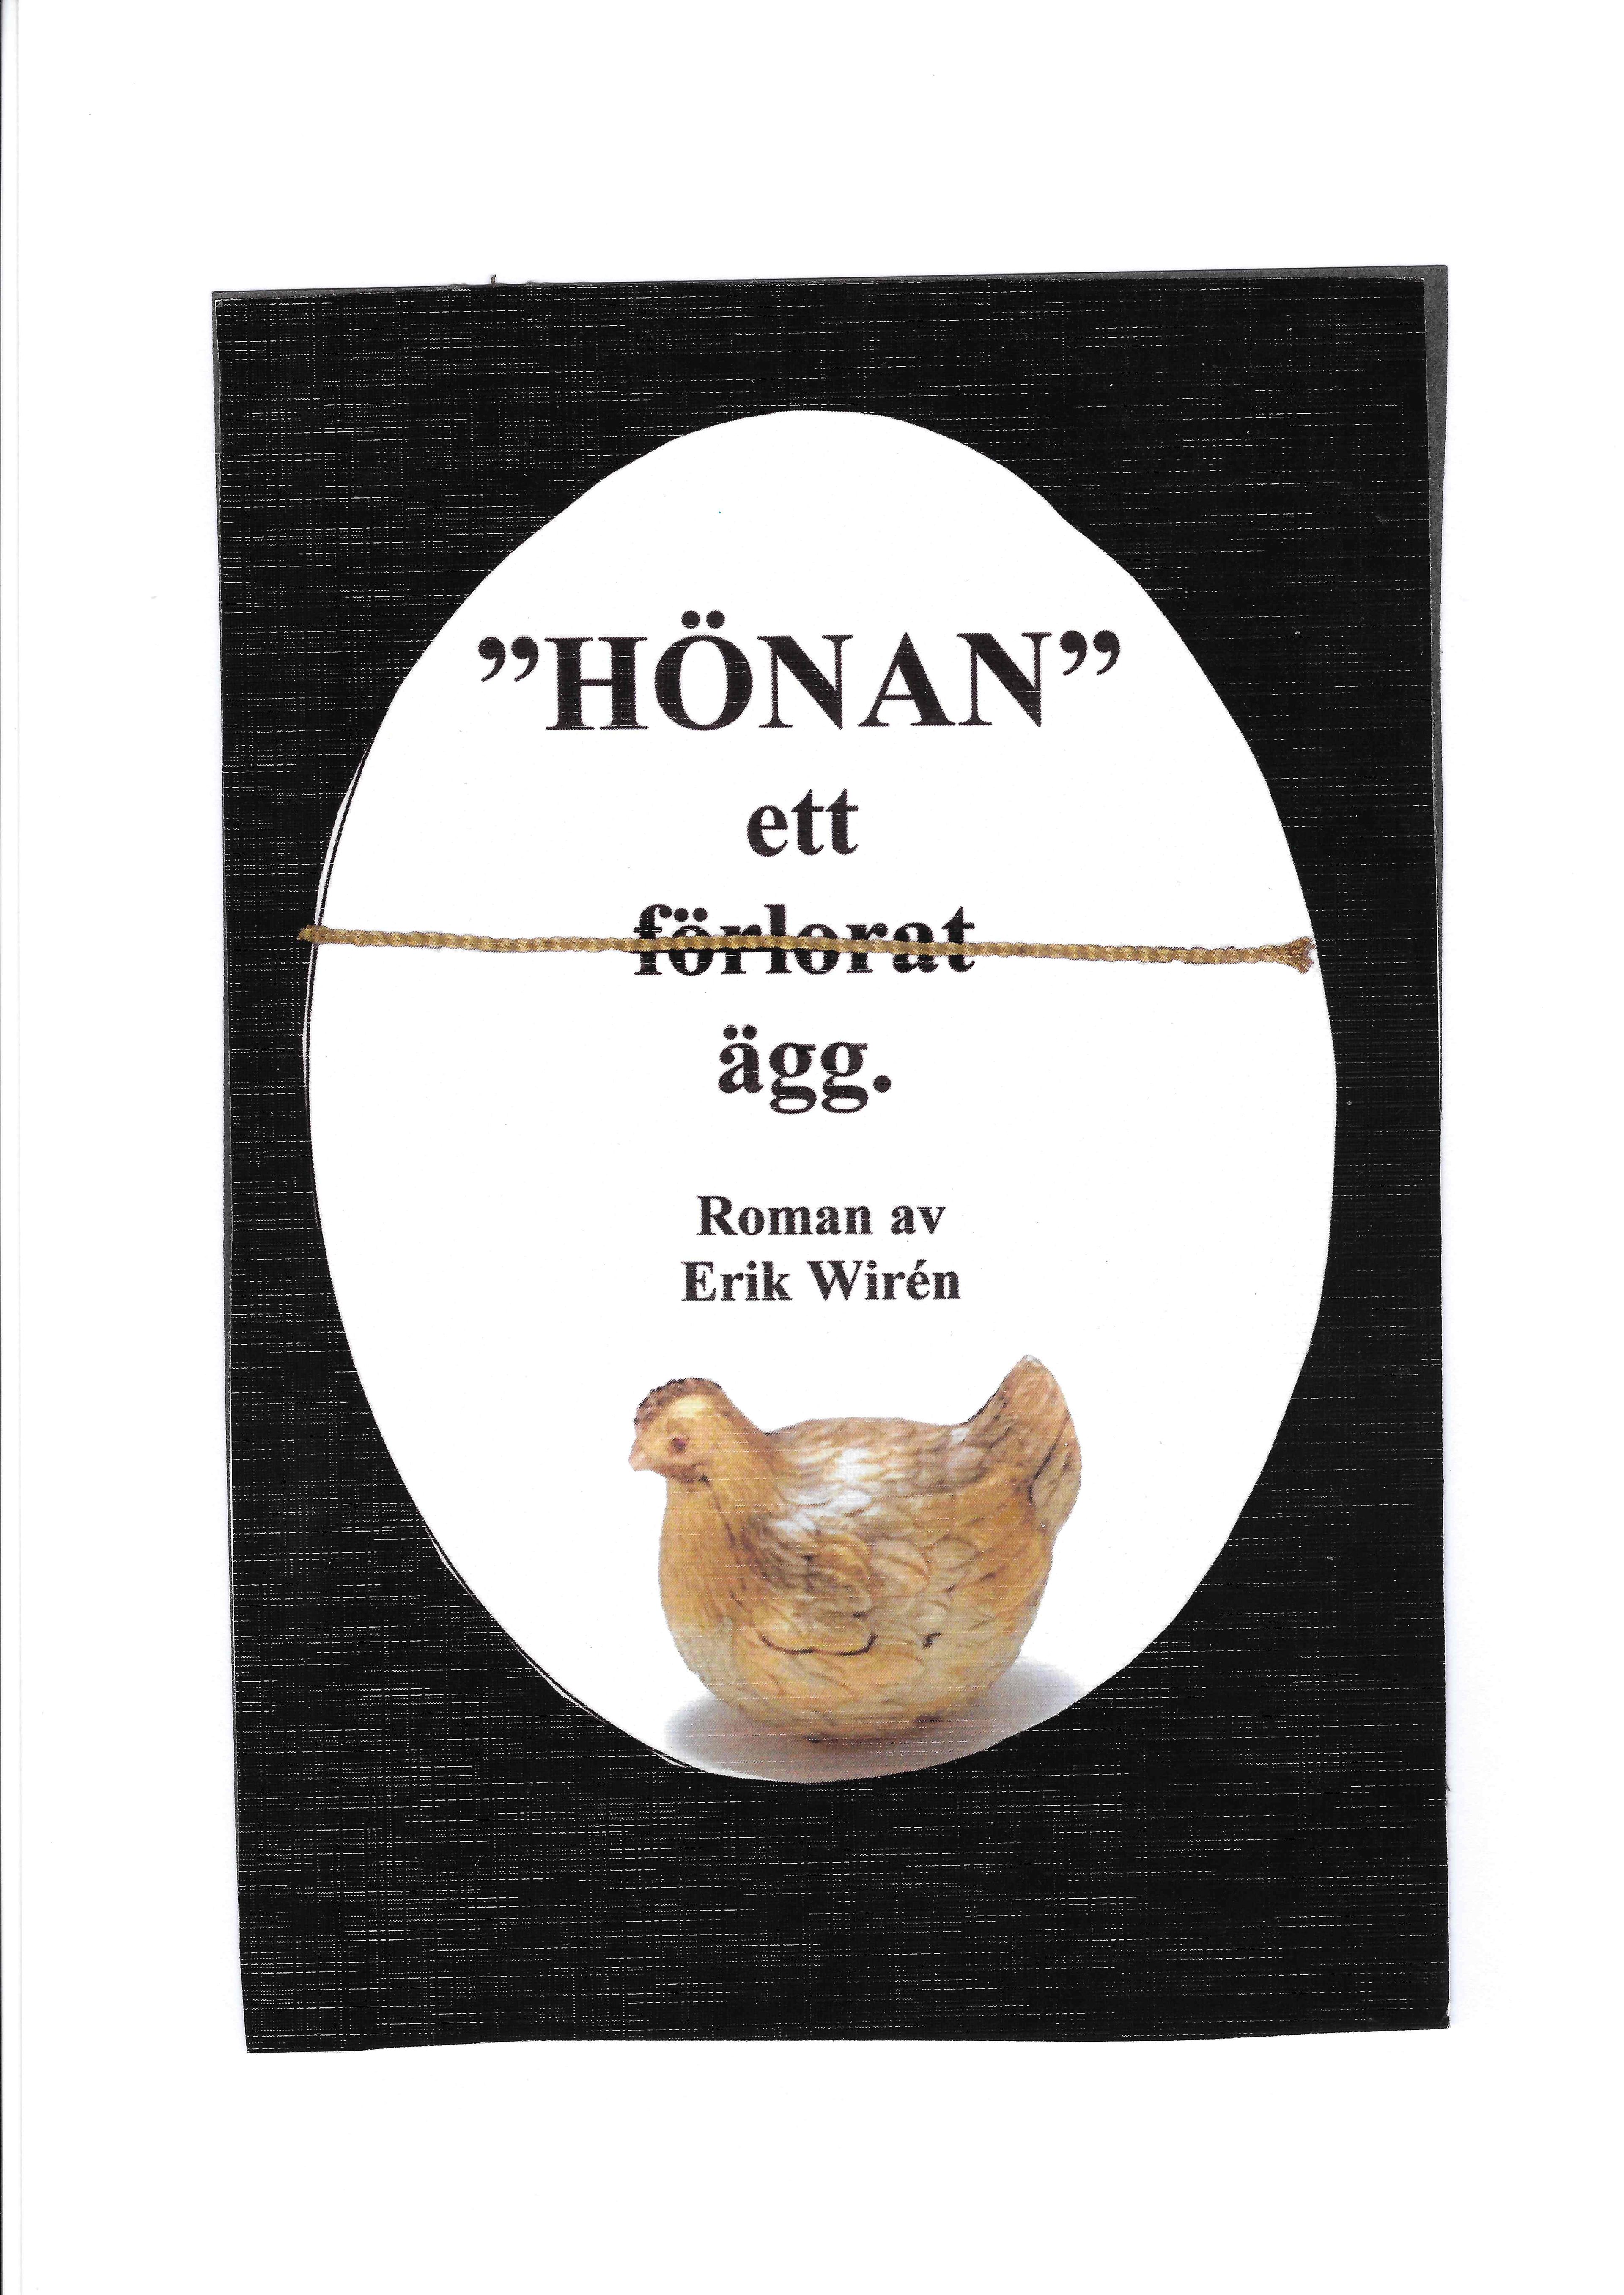 Hönan - ett (förlorat) ägg, e-bog af Erik Wirén